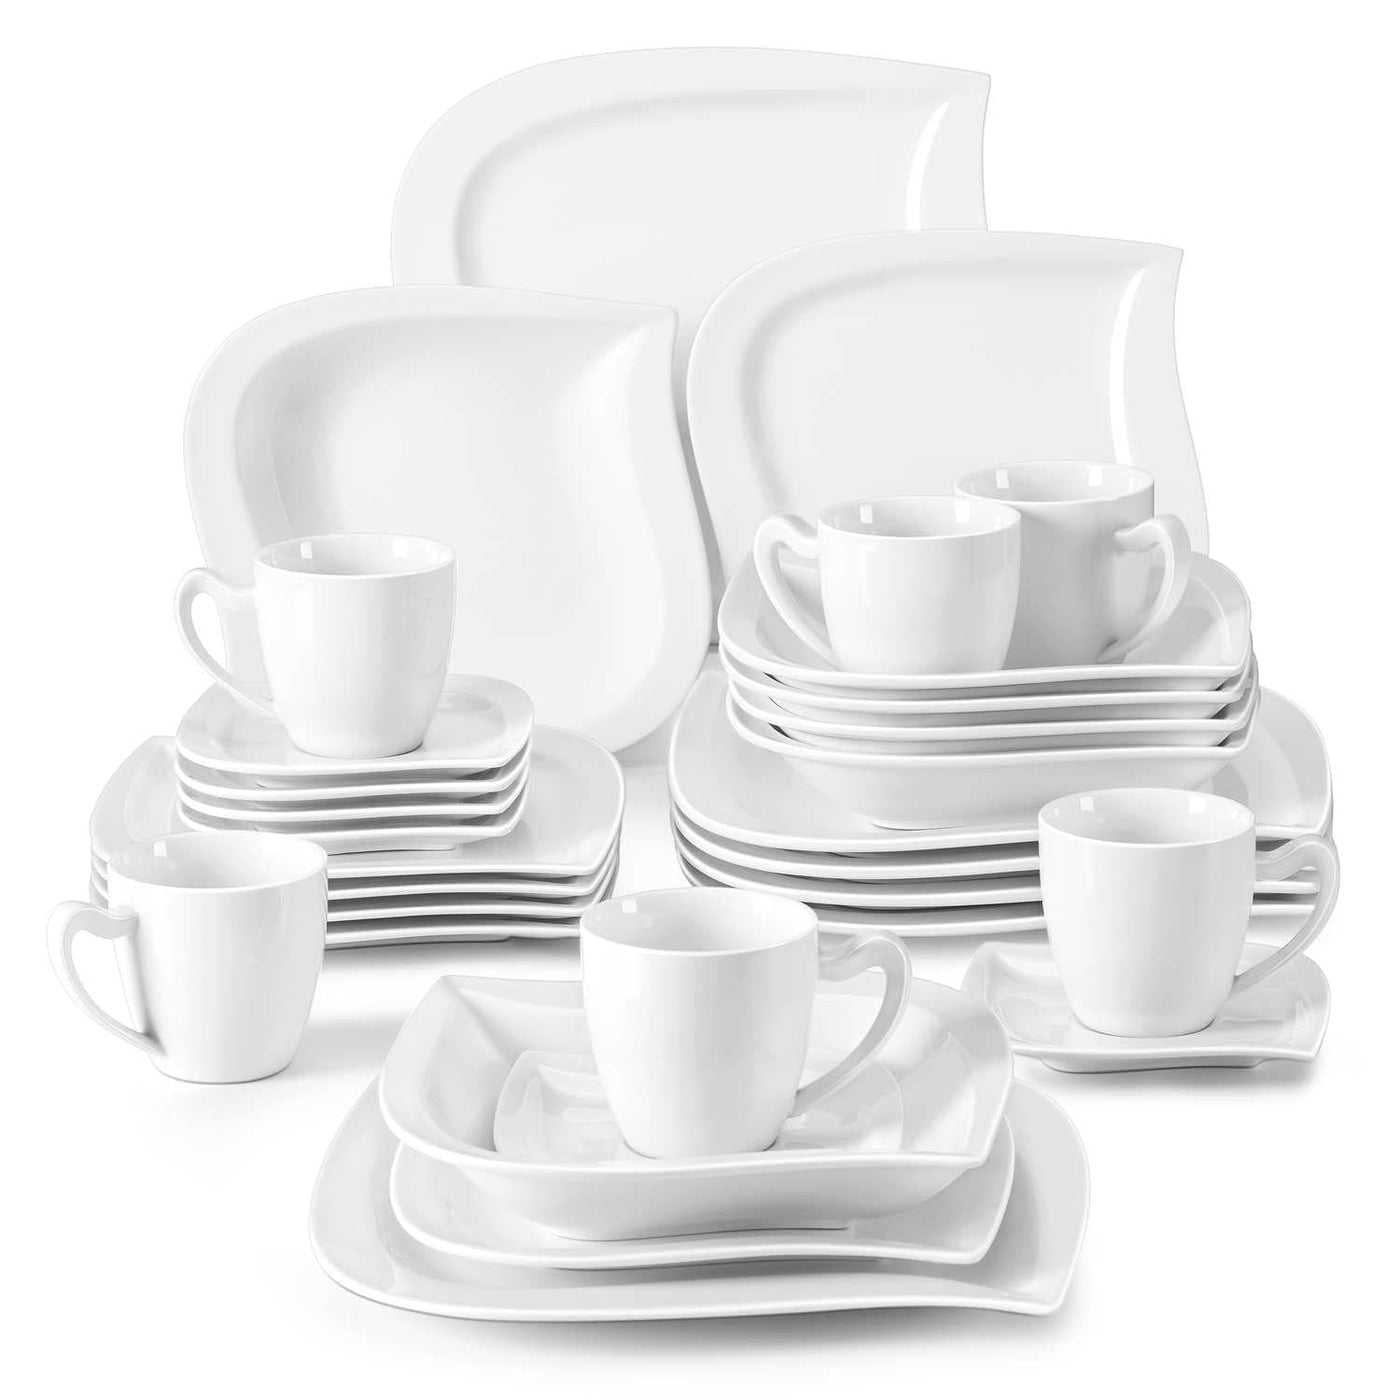 MALACASA Elisa 30-Piece Ivory White Porcelain Dinnerware Set